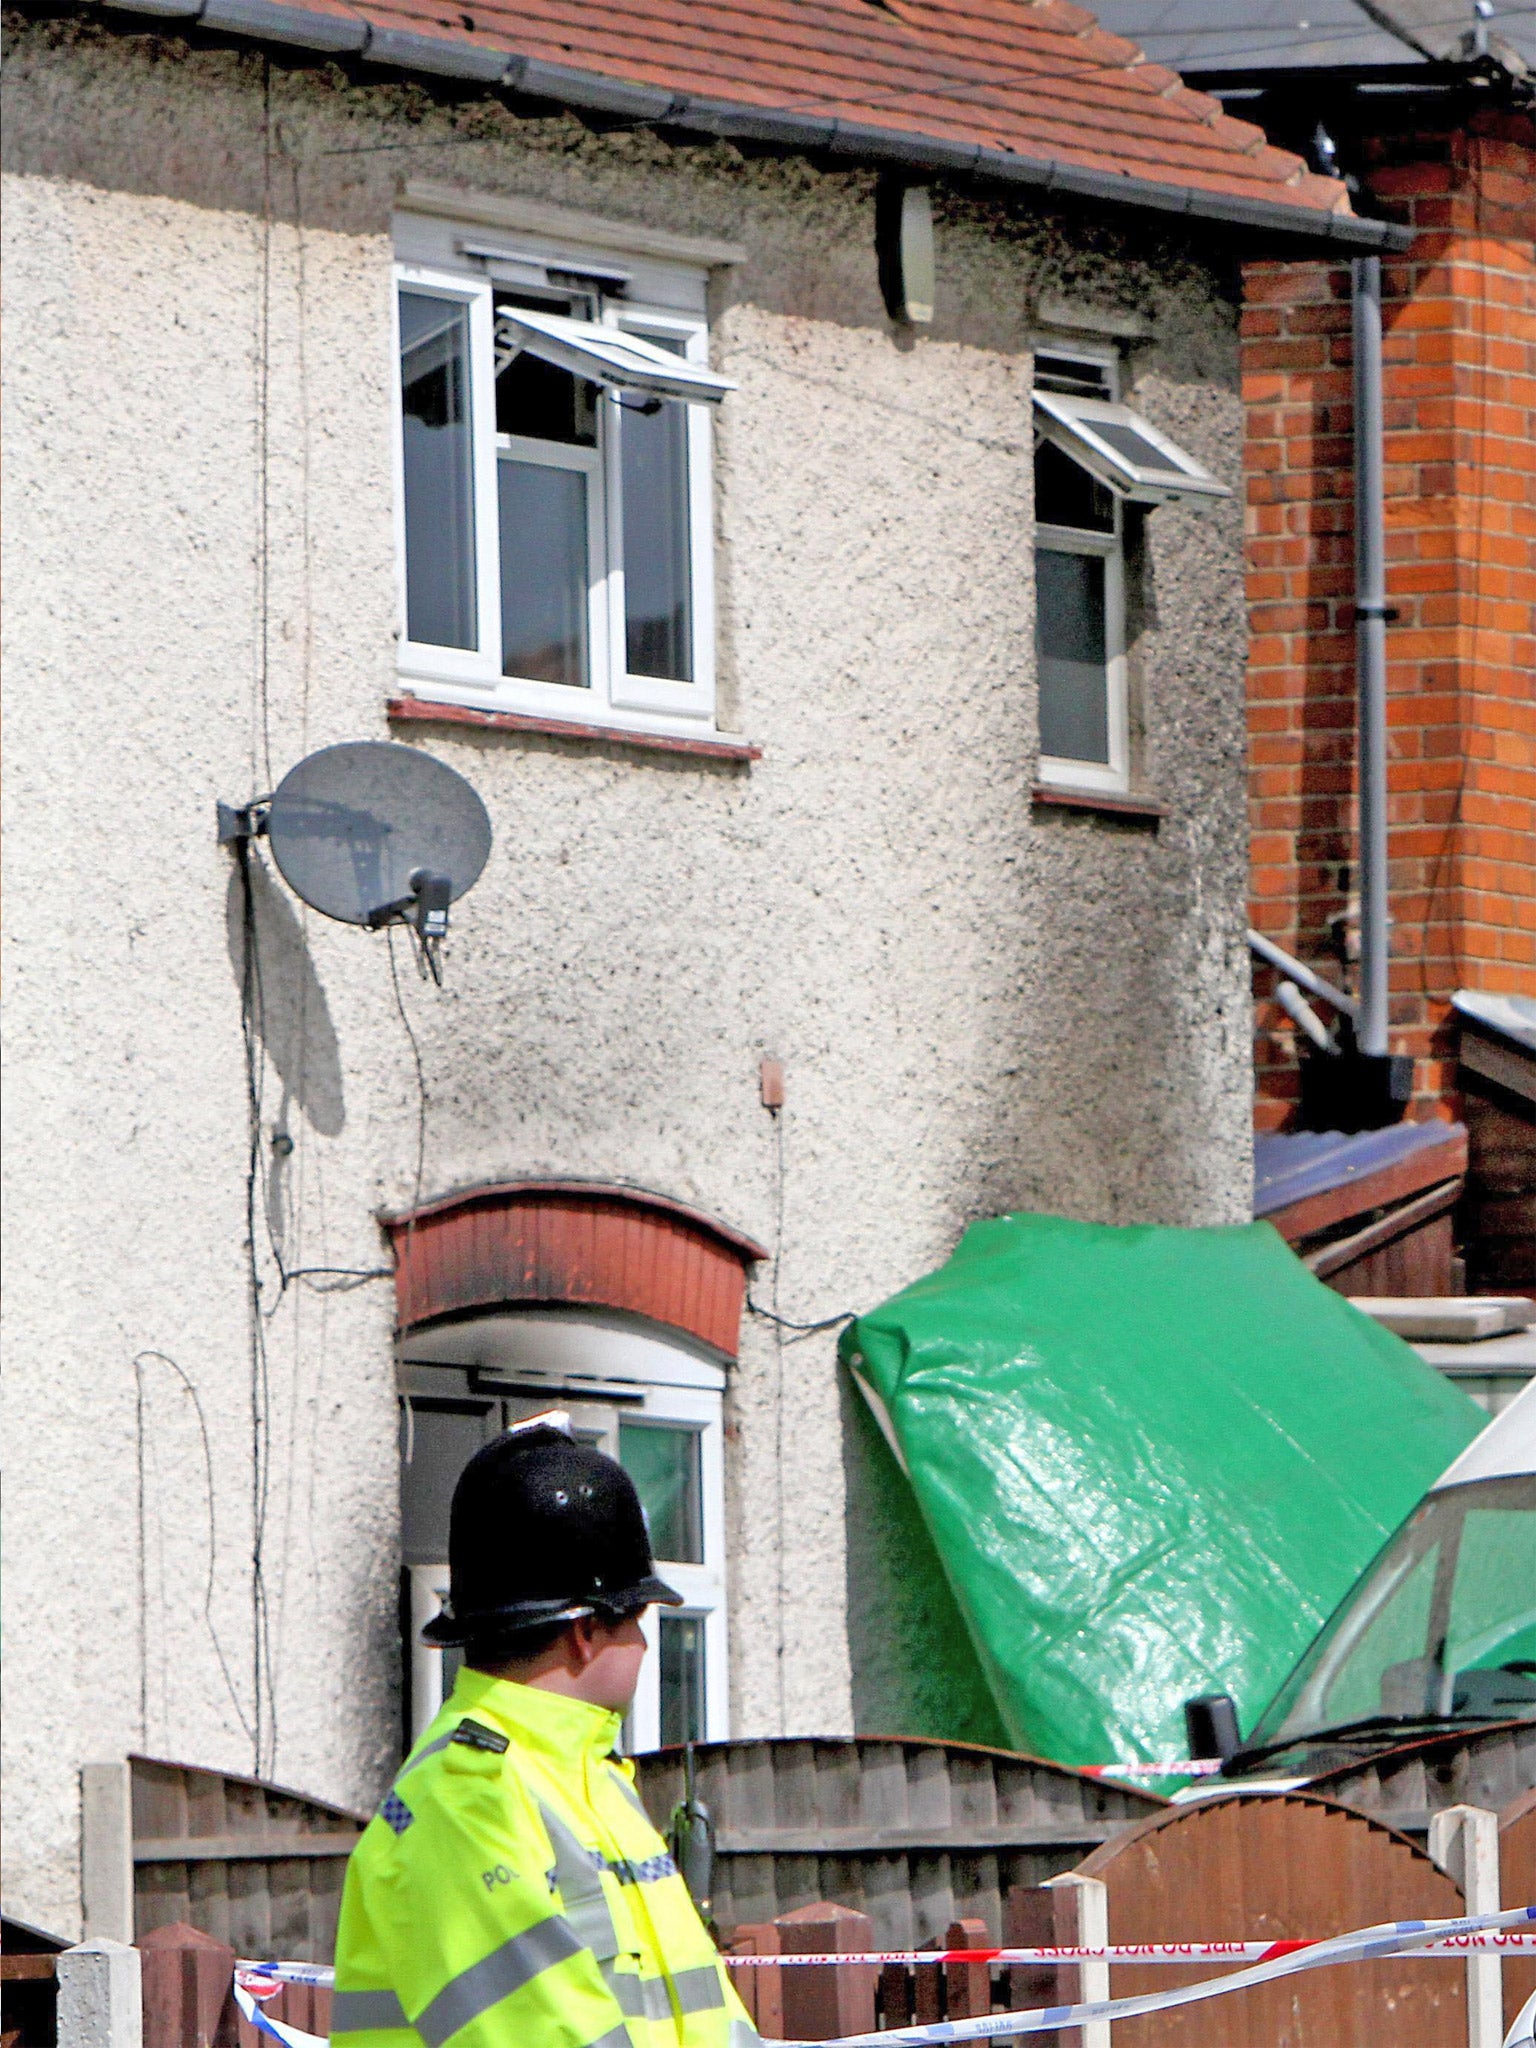 The crime scene following the fire at the Philpott home in Allenton, Derby